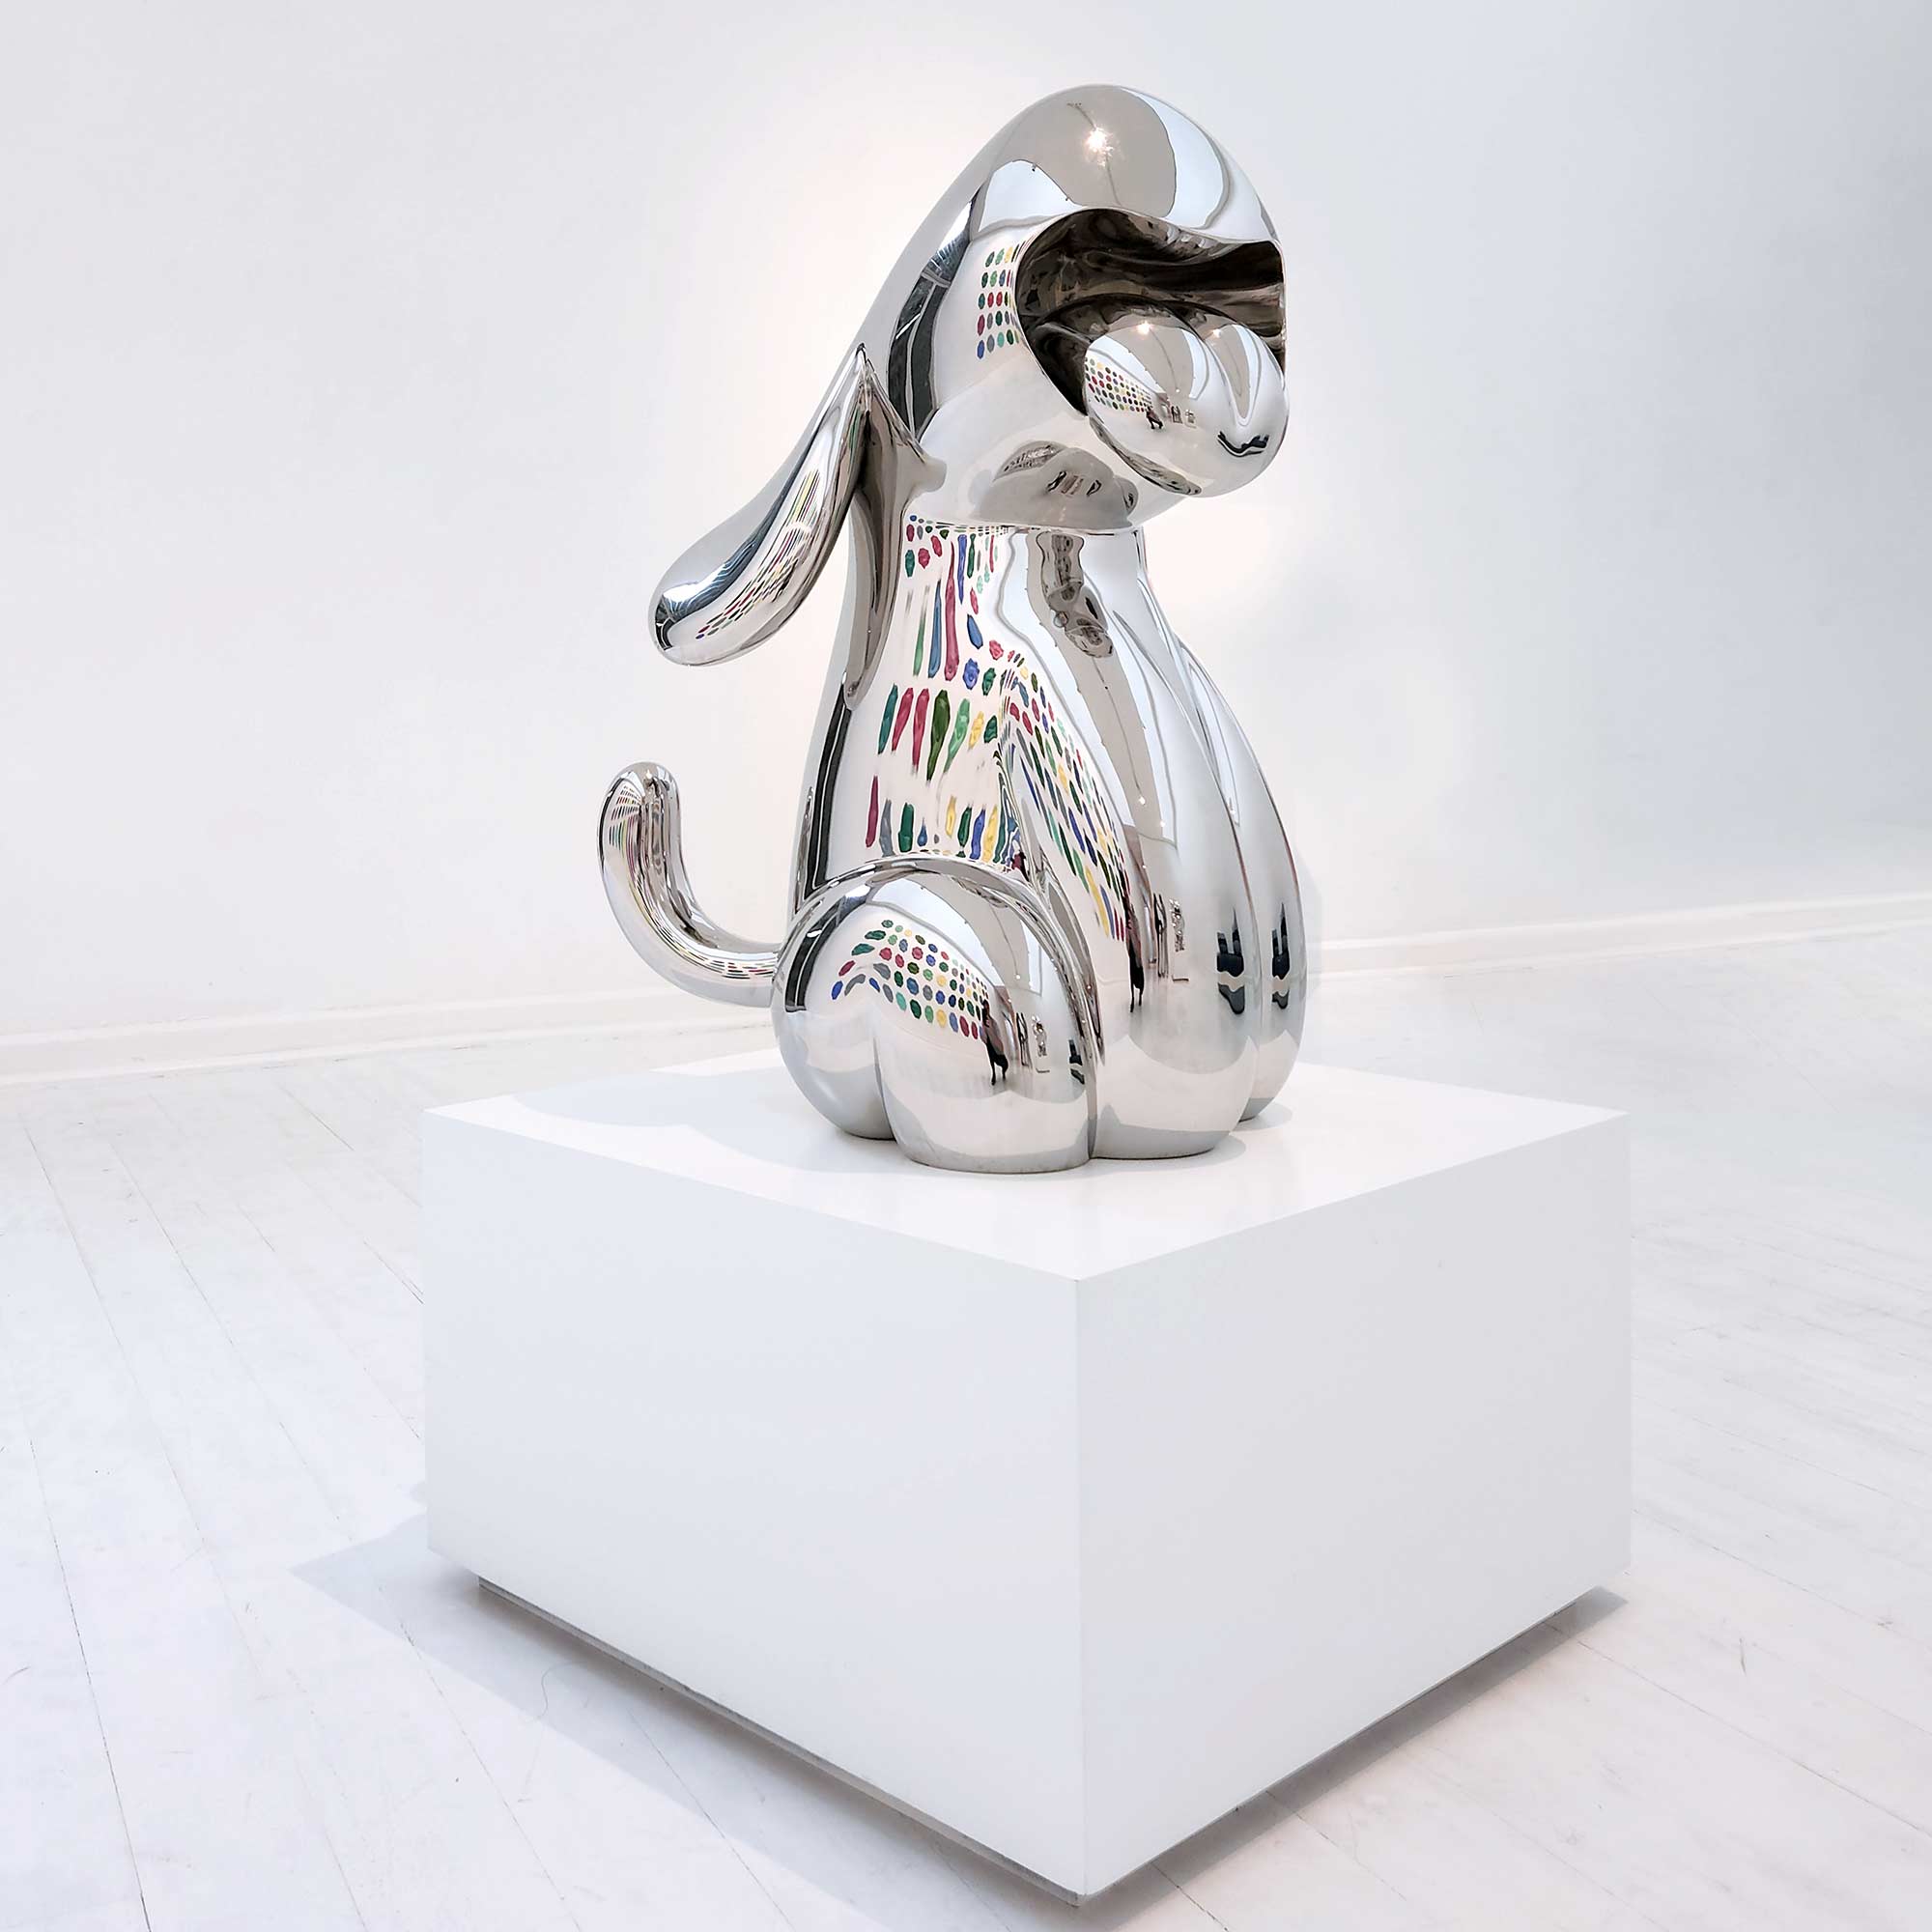 Dog Roar, Polished Stainless steel sculpture, 80 cm high by Ferdi B Dick, hero view